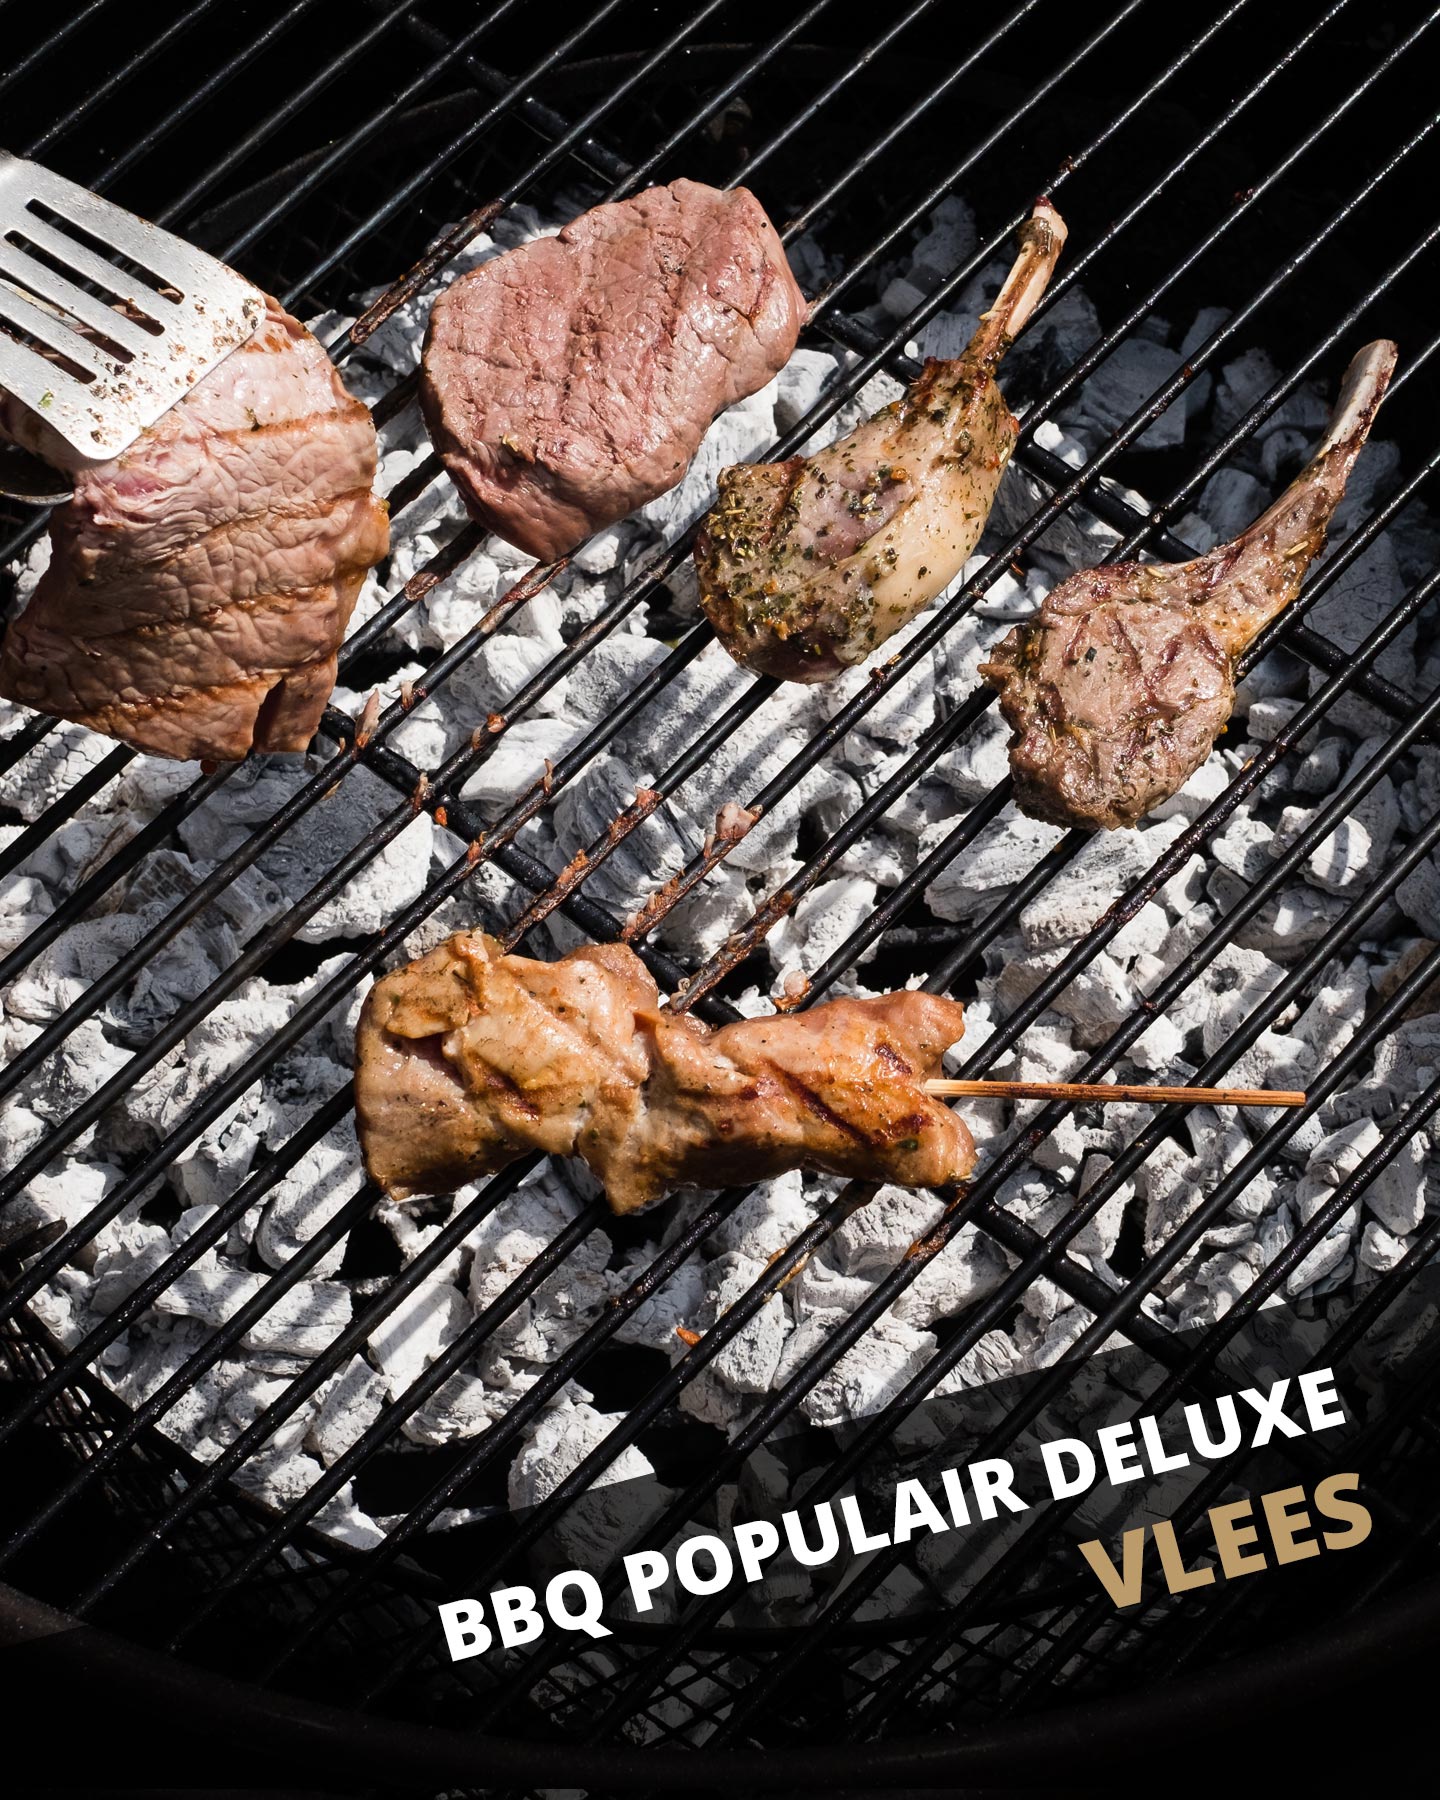 BBQ populair deluxe - vlees (400 gr)